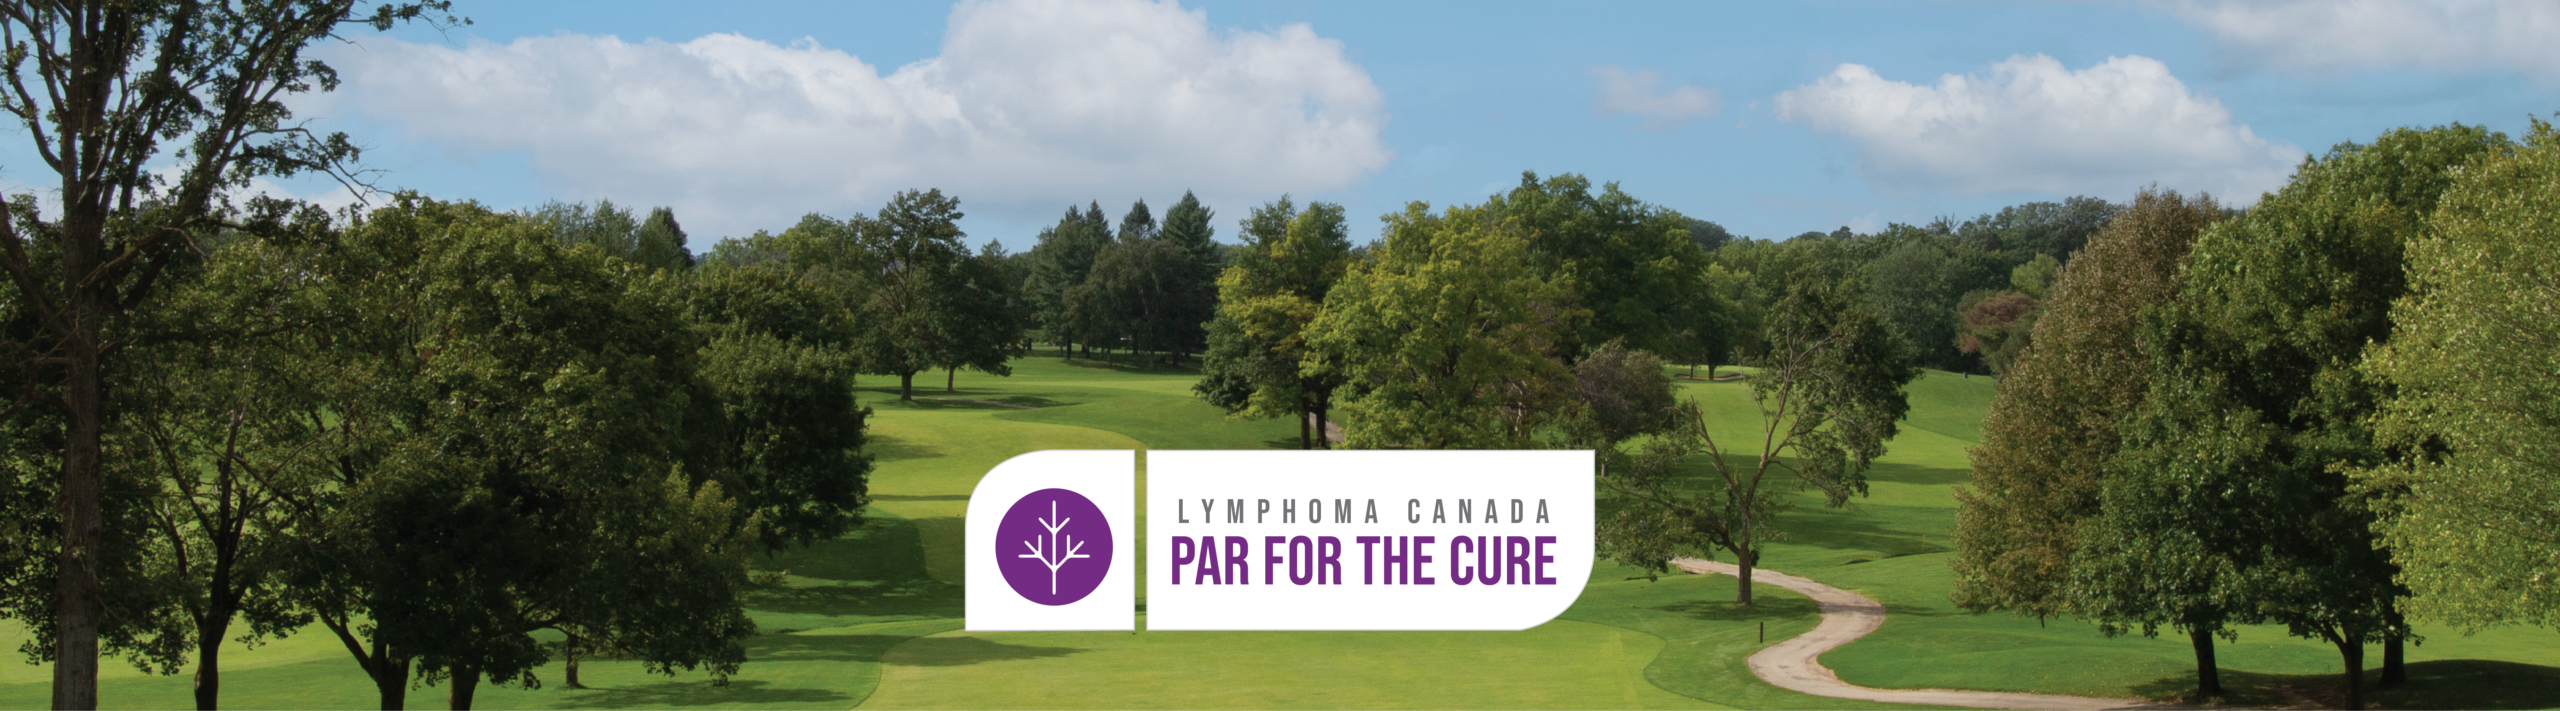 Par for the Cure Annual Golf Tournament